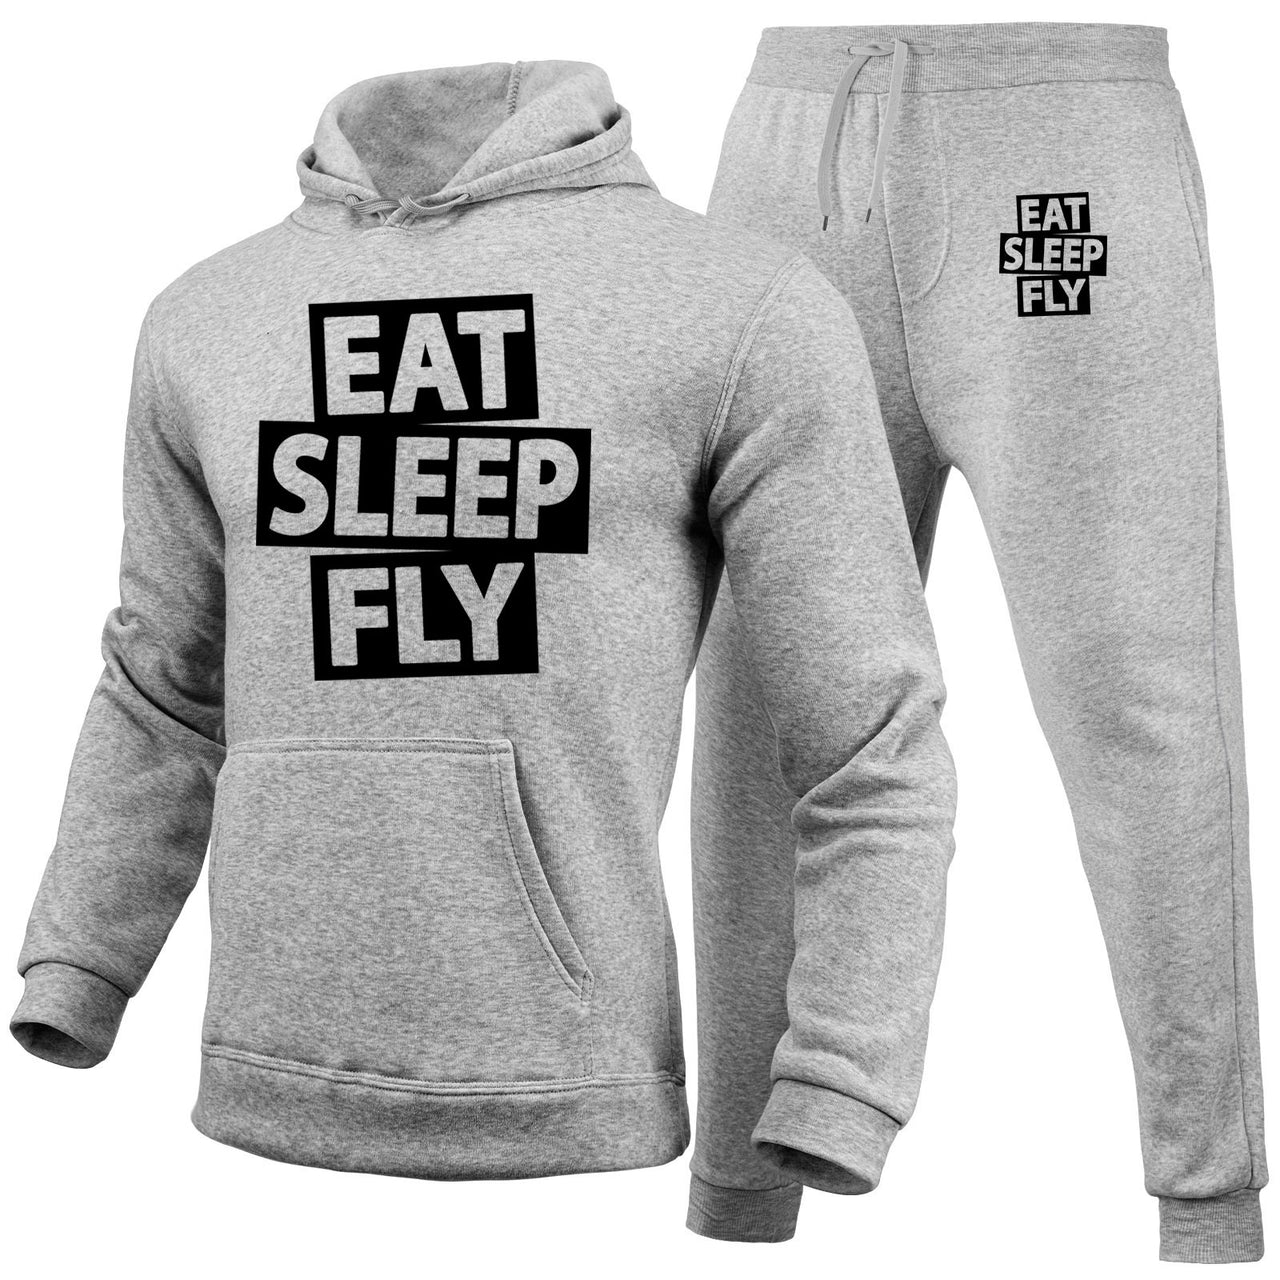 Eat Sleep Fly Designed Hoodies & Sweatpants Set